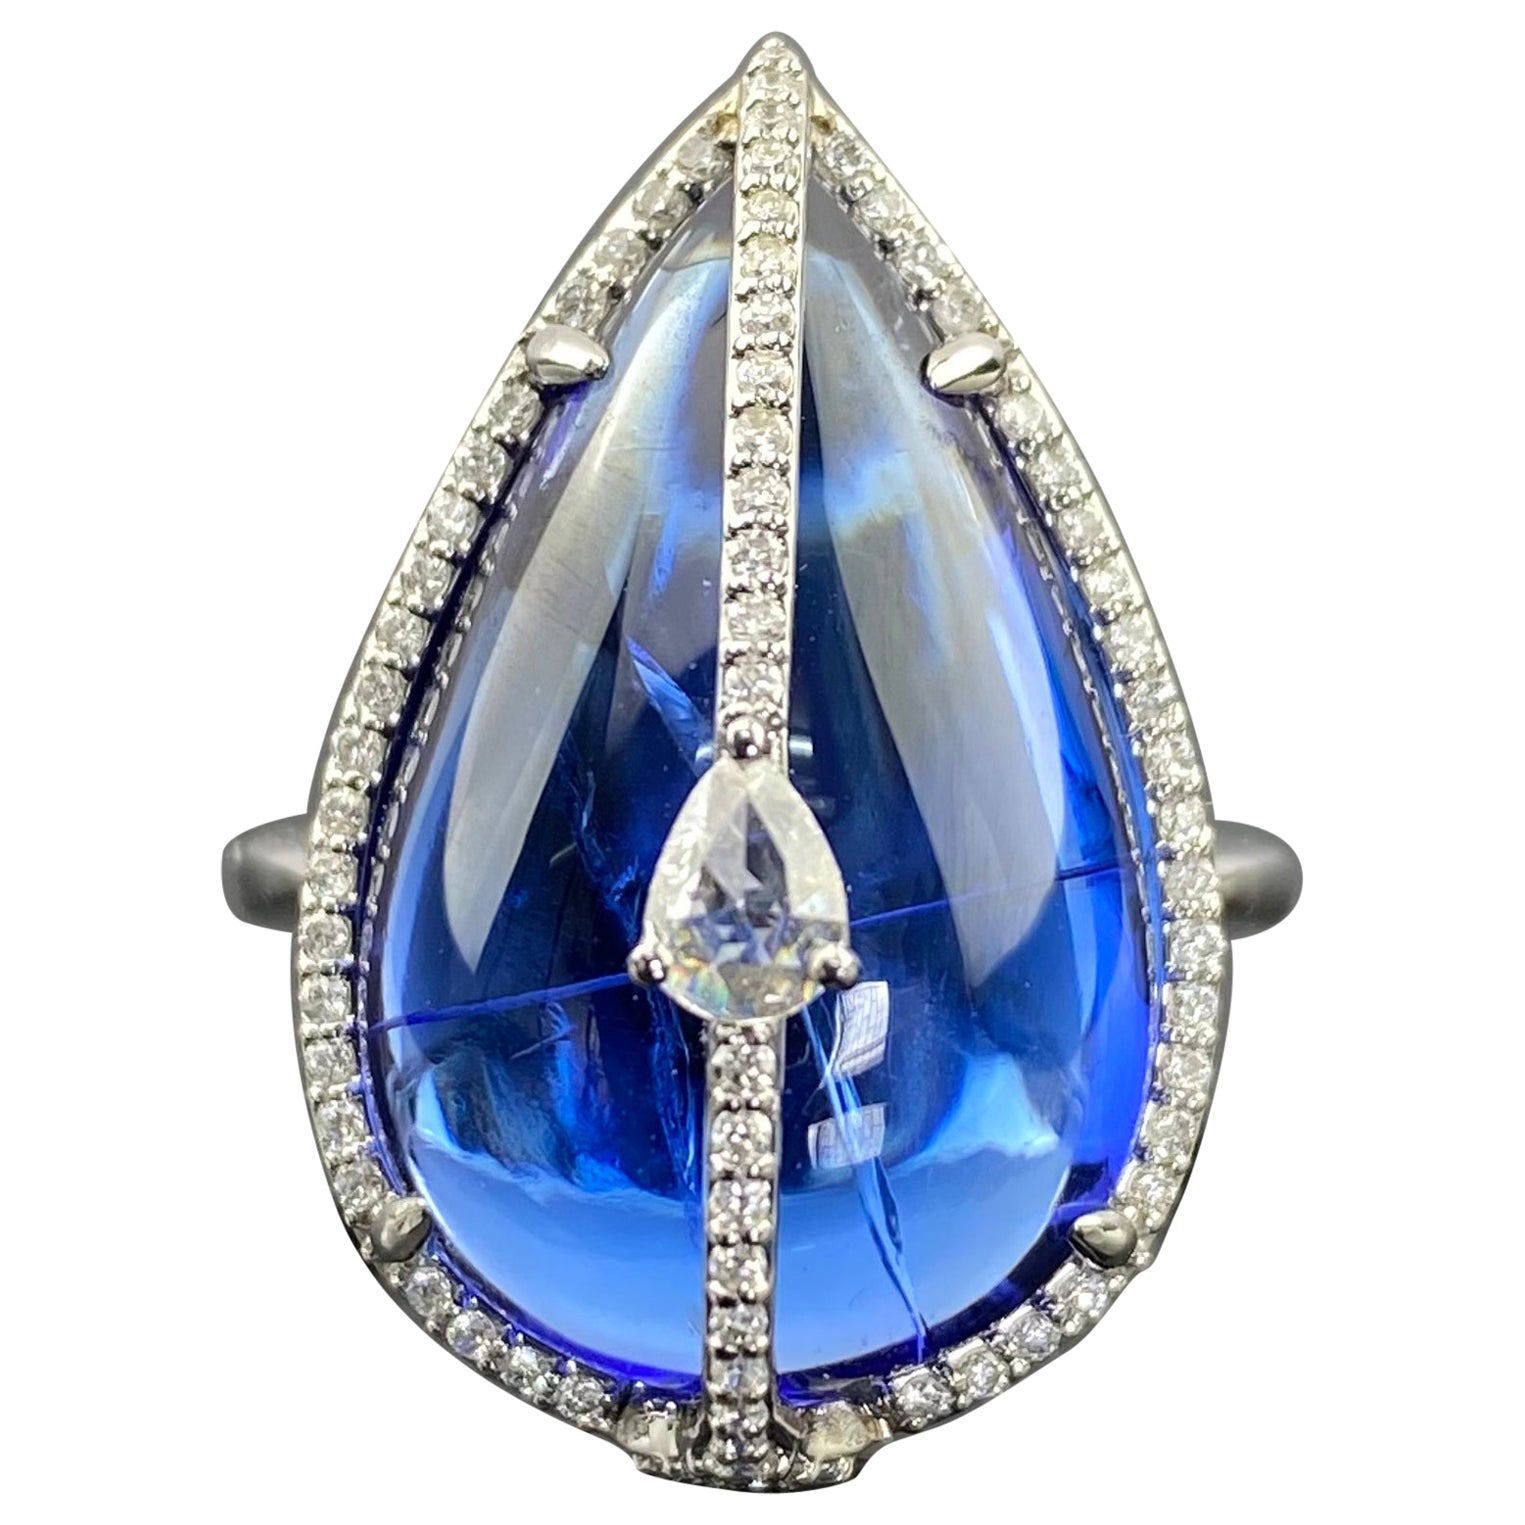 Certified Natural Pear Shaped Cabochon Tanzanite Ring with VVS Diamond